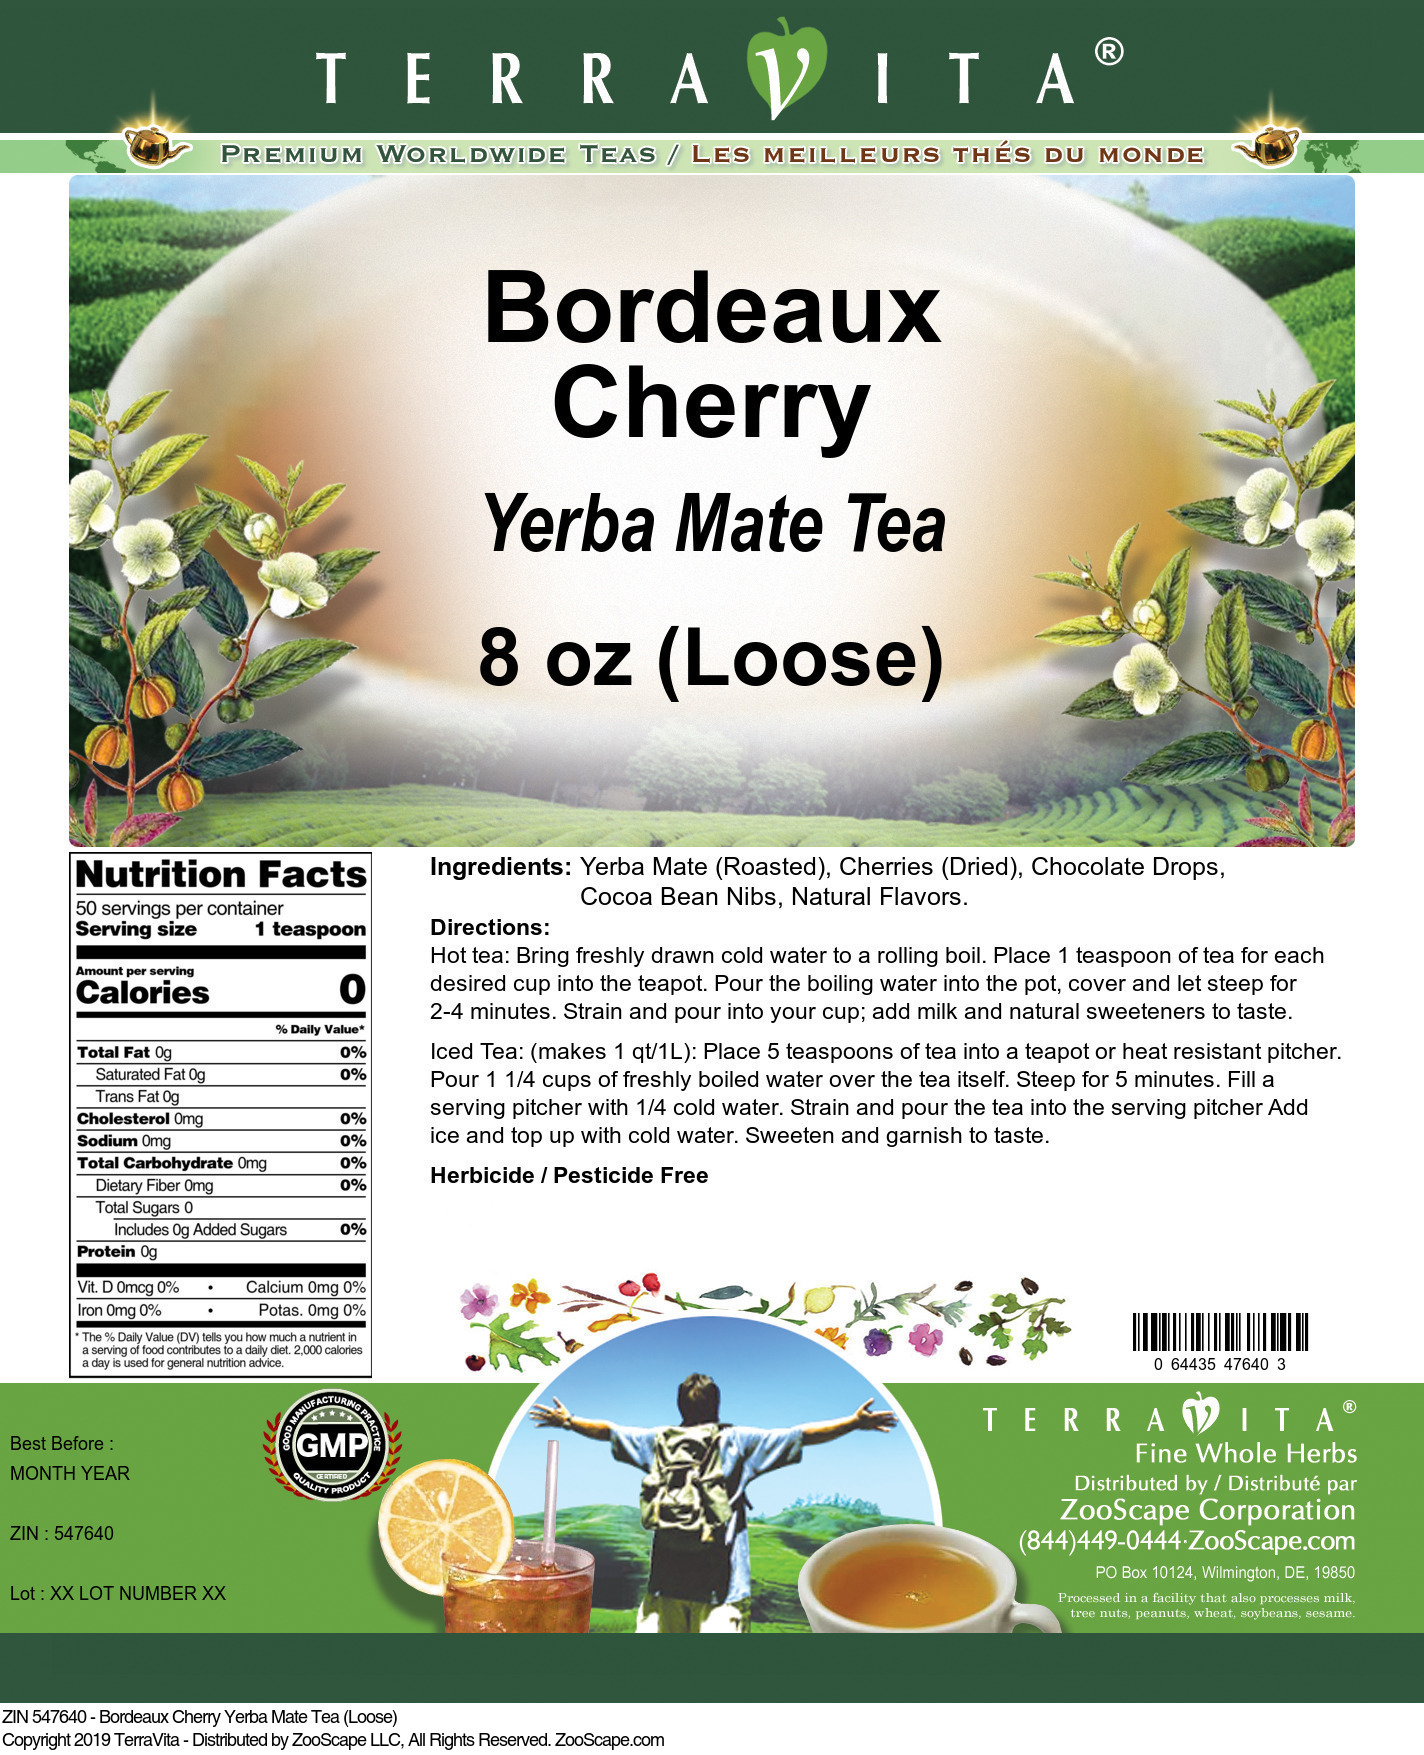 Bordeaux Cherry Yerba Mate Tea (Loose) - Label